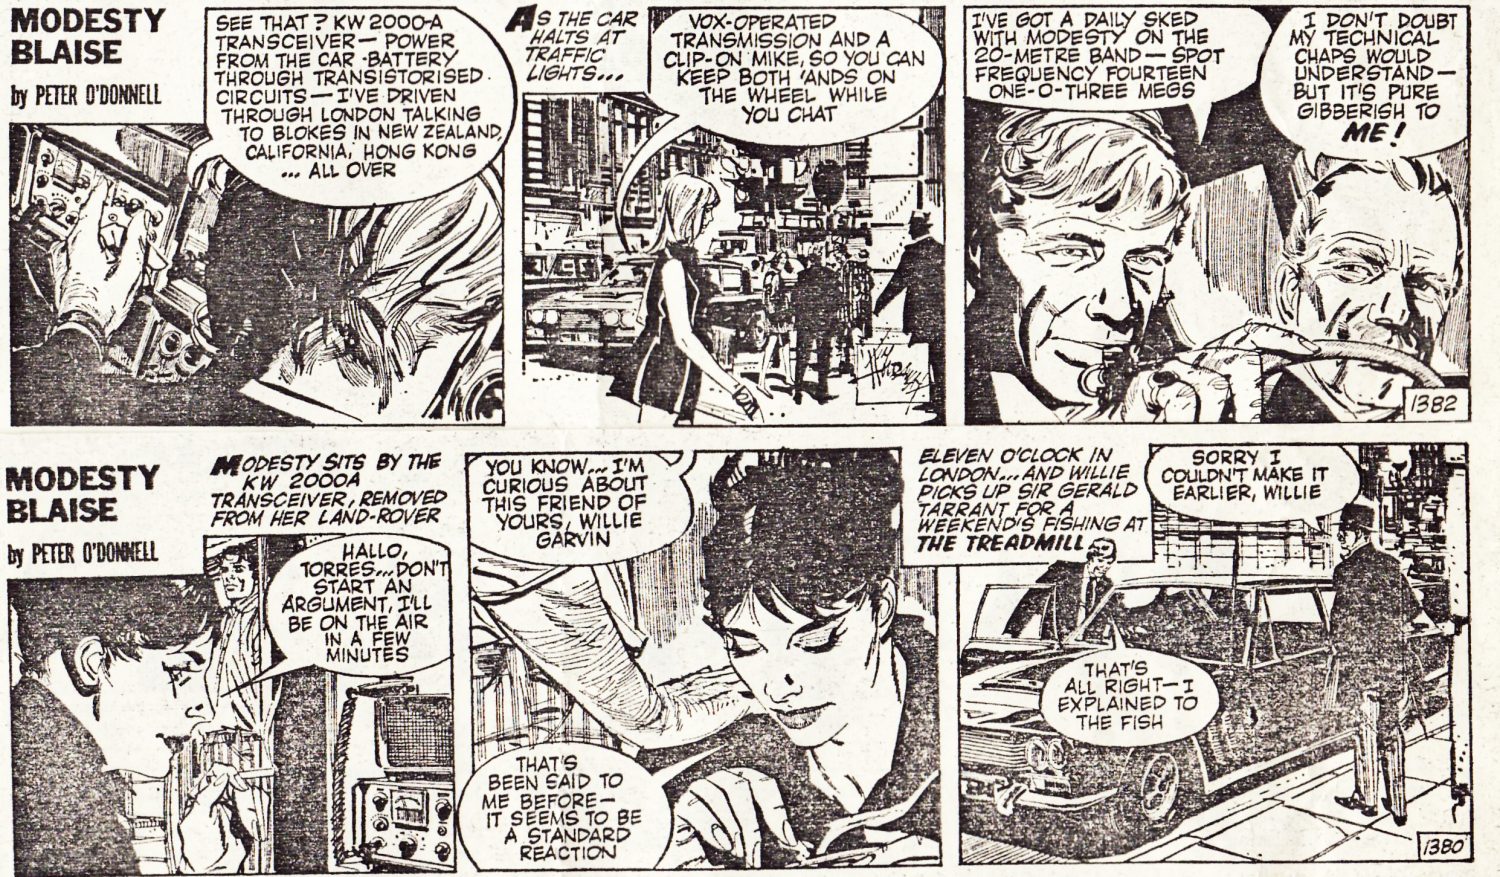 Modesty Blaise Comic Strip 1967 (Source Chris Ridley)